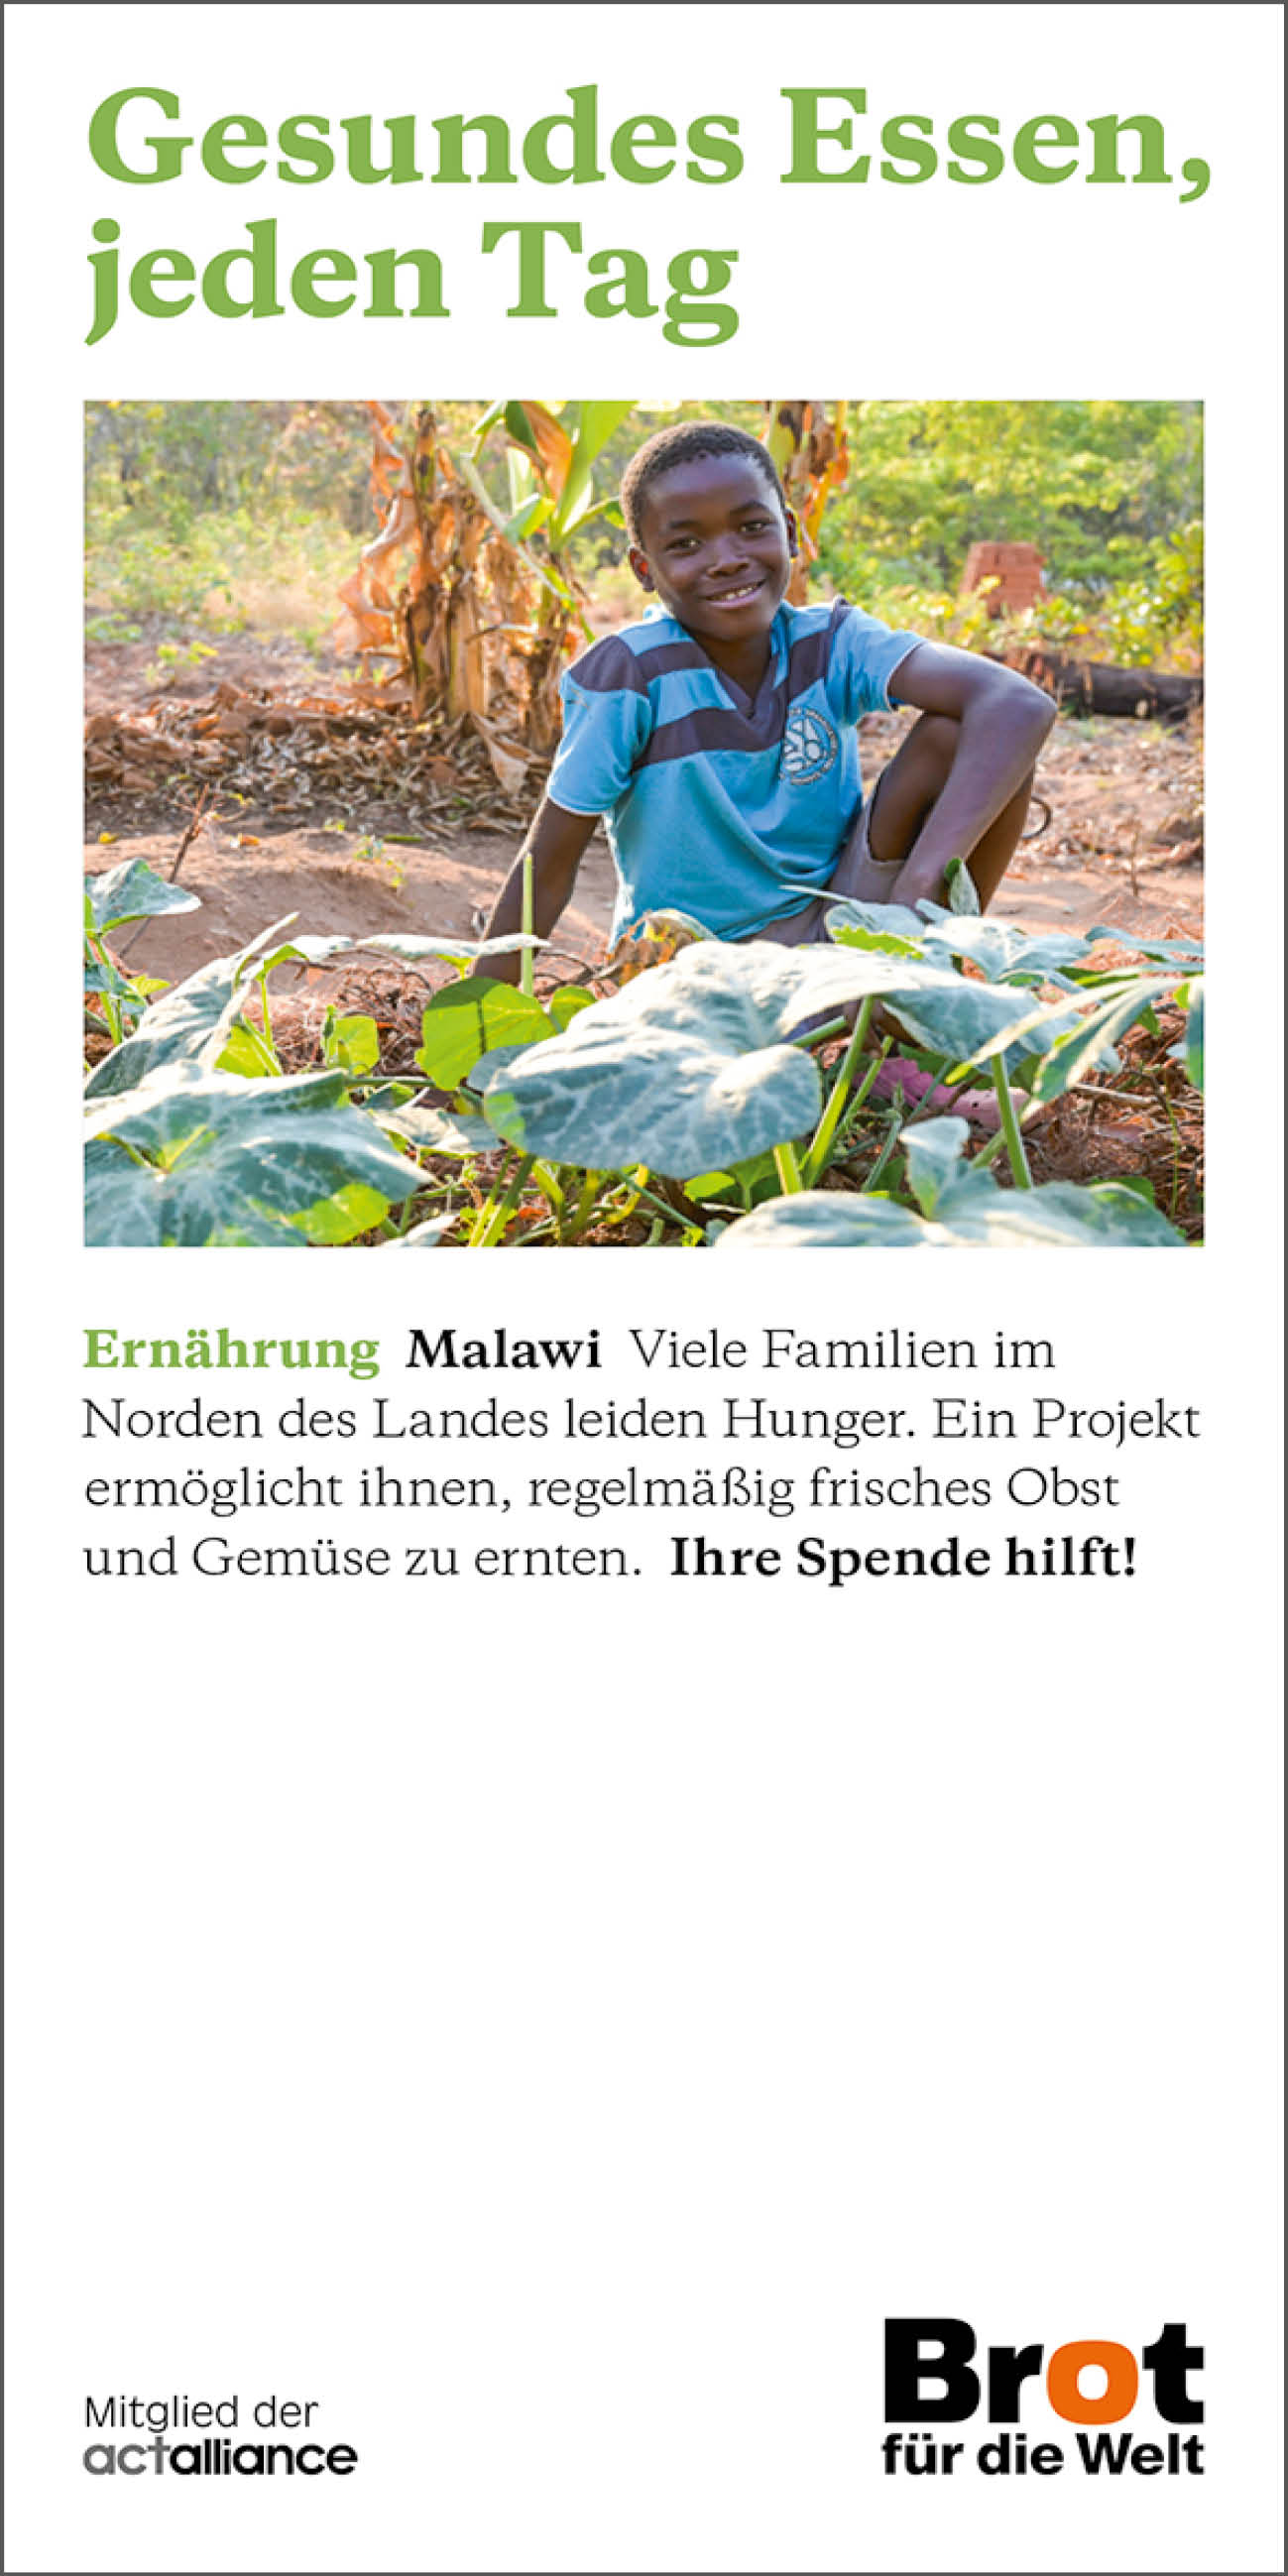 Malawi: Gesundes Essen - jeden Tag (Faltblatt Ernährung)